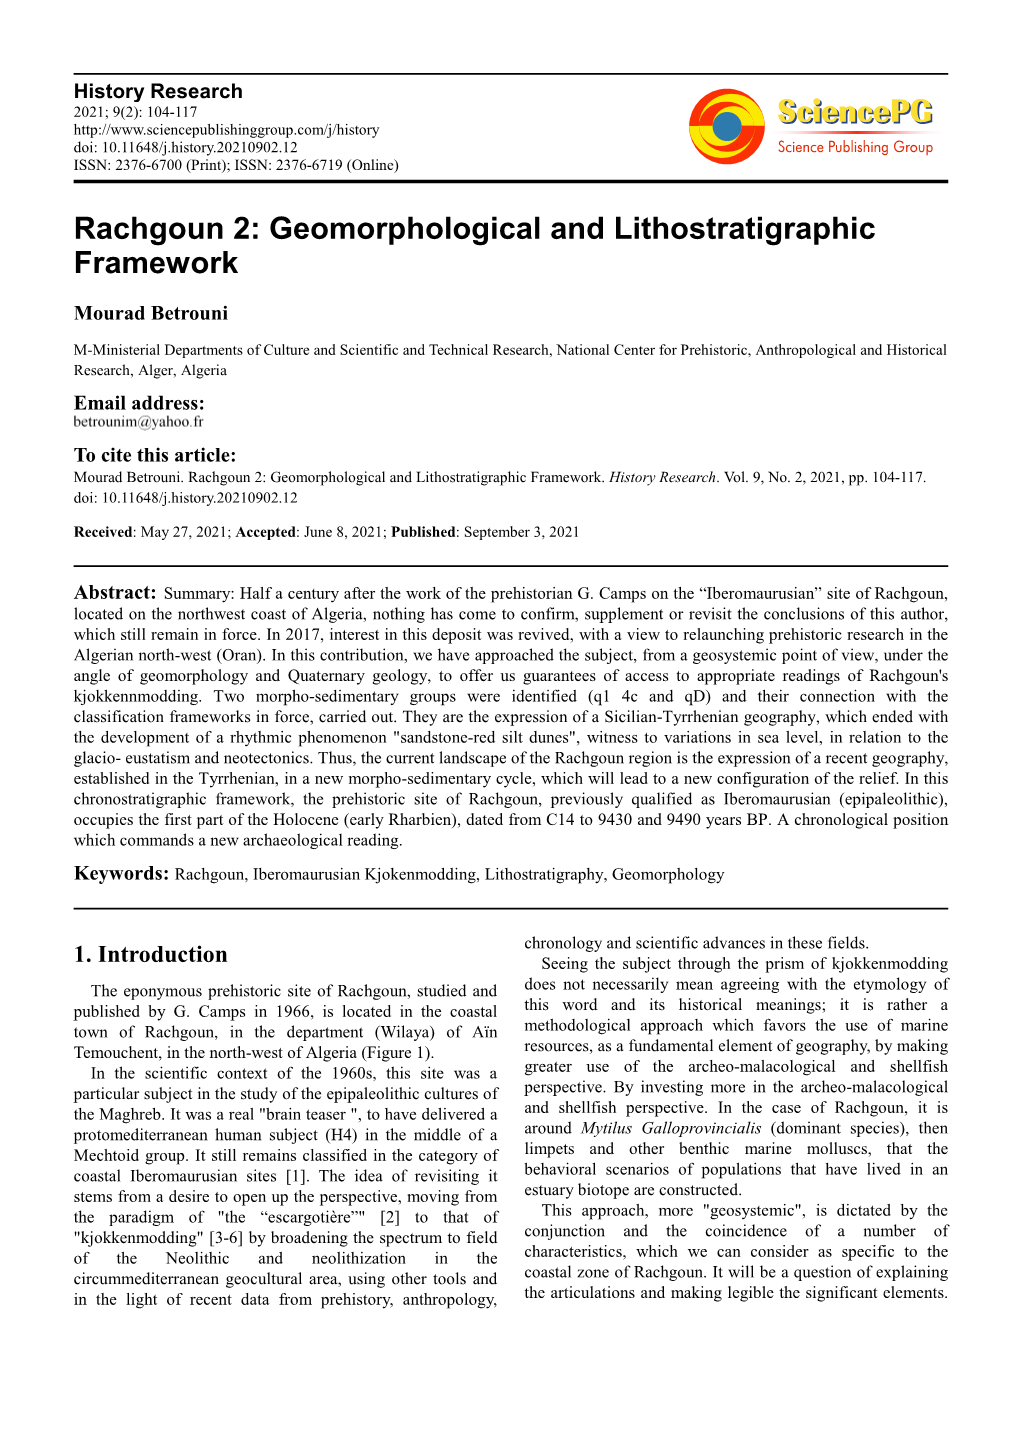 Rachgoun 2: Geomorphological and Lithostratigraphic Framework